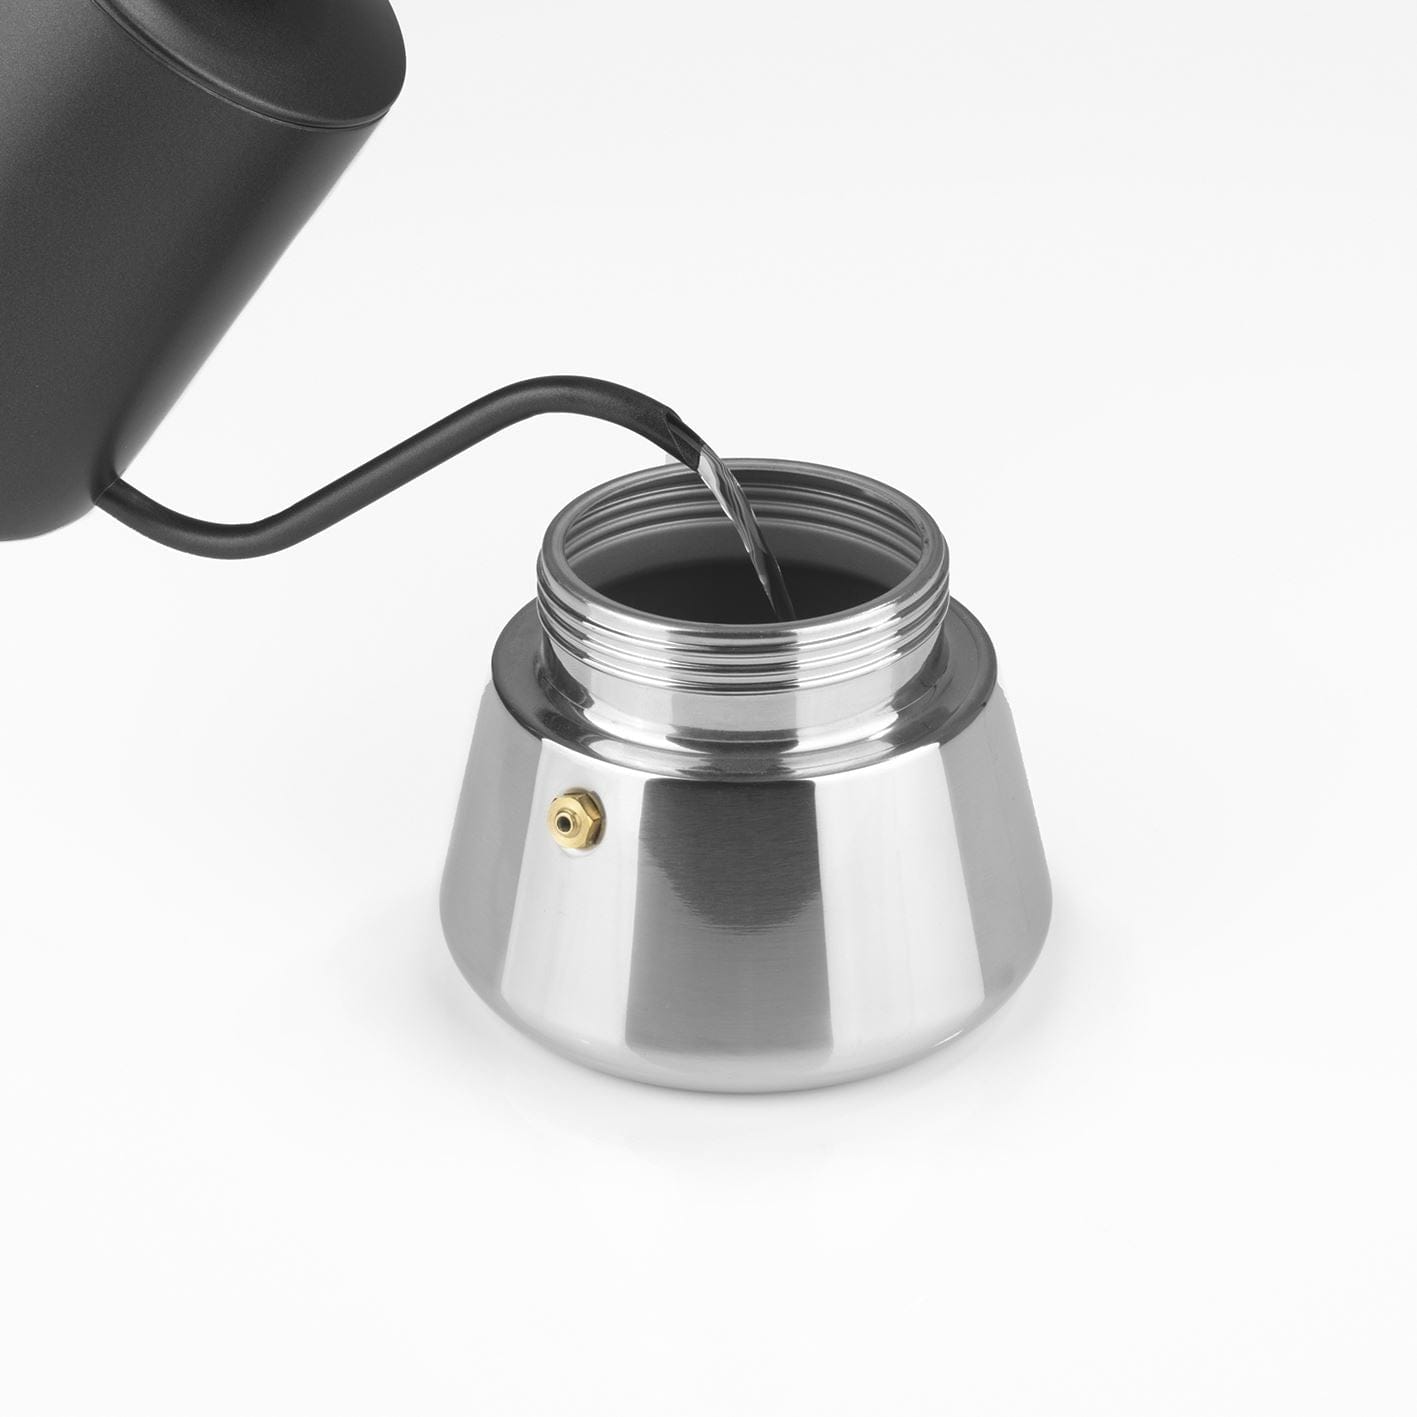 ESPRESSOMAKER Espresso Maker (300ml) - Stainless Steel/Black